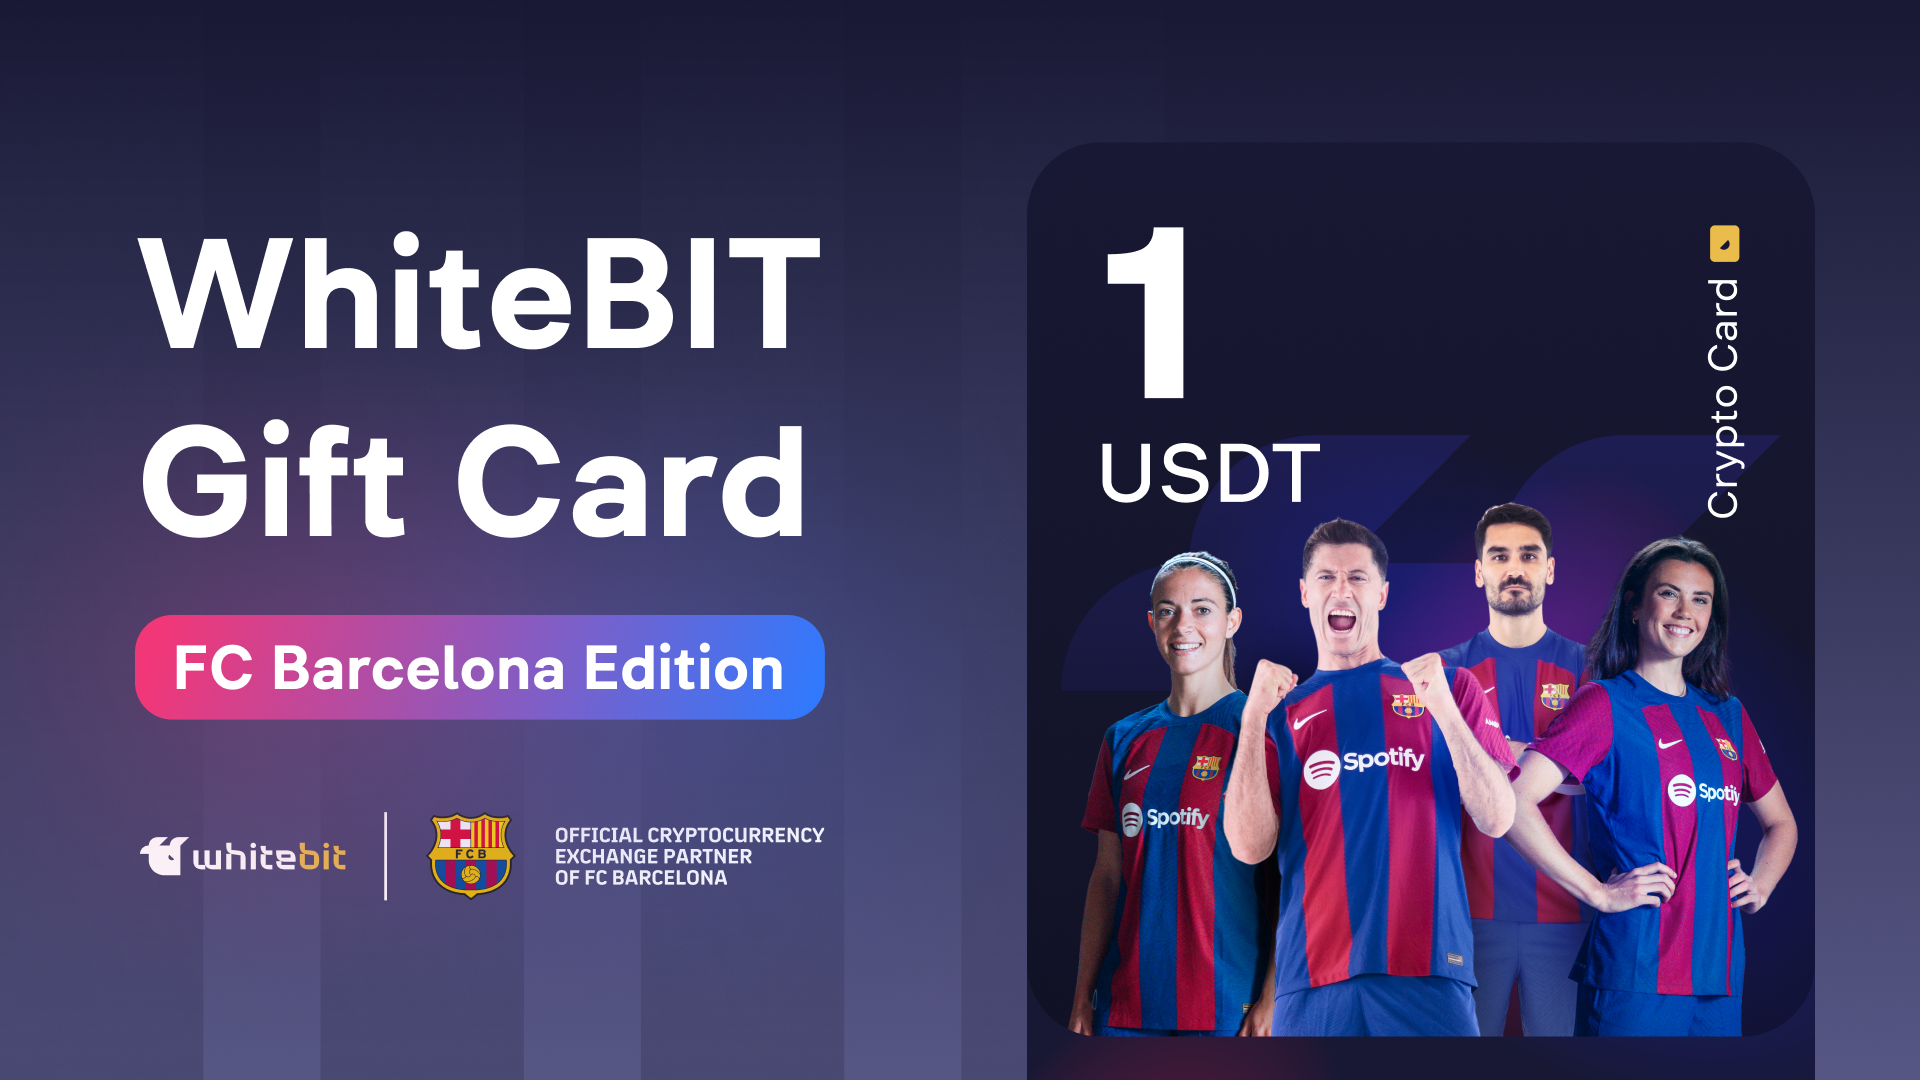 WhiteBIT - FC Barcelona Edition - 1 USDT Gift Card, $1.39